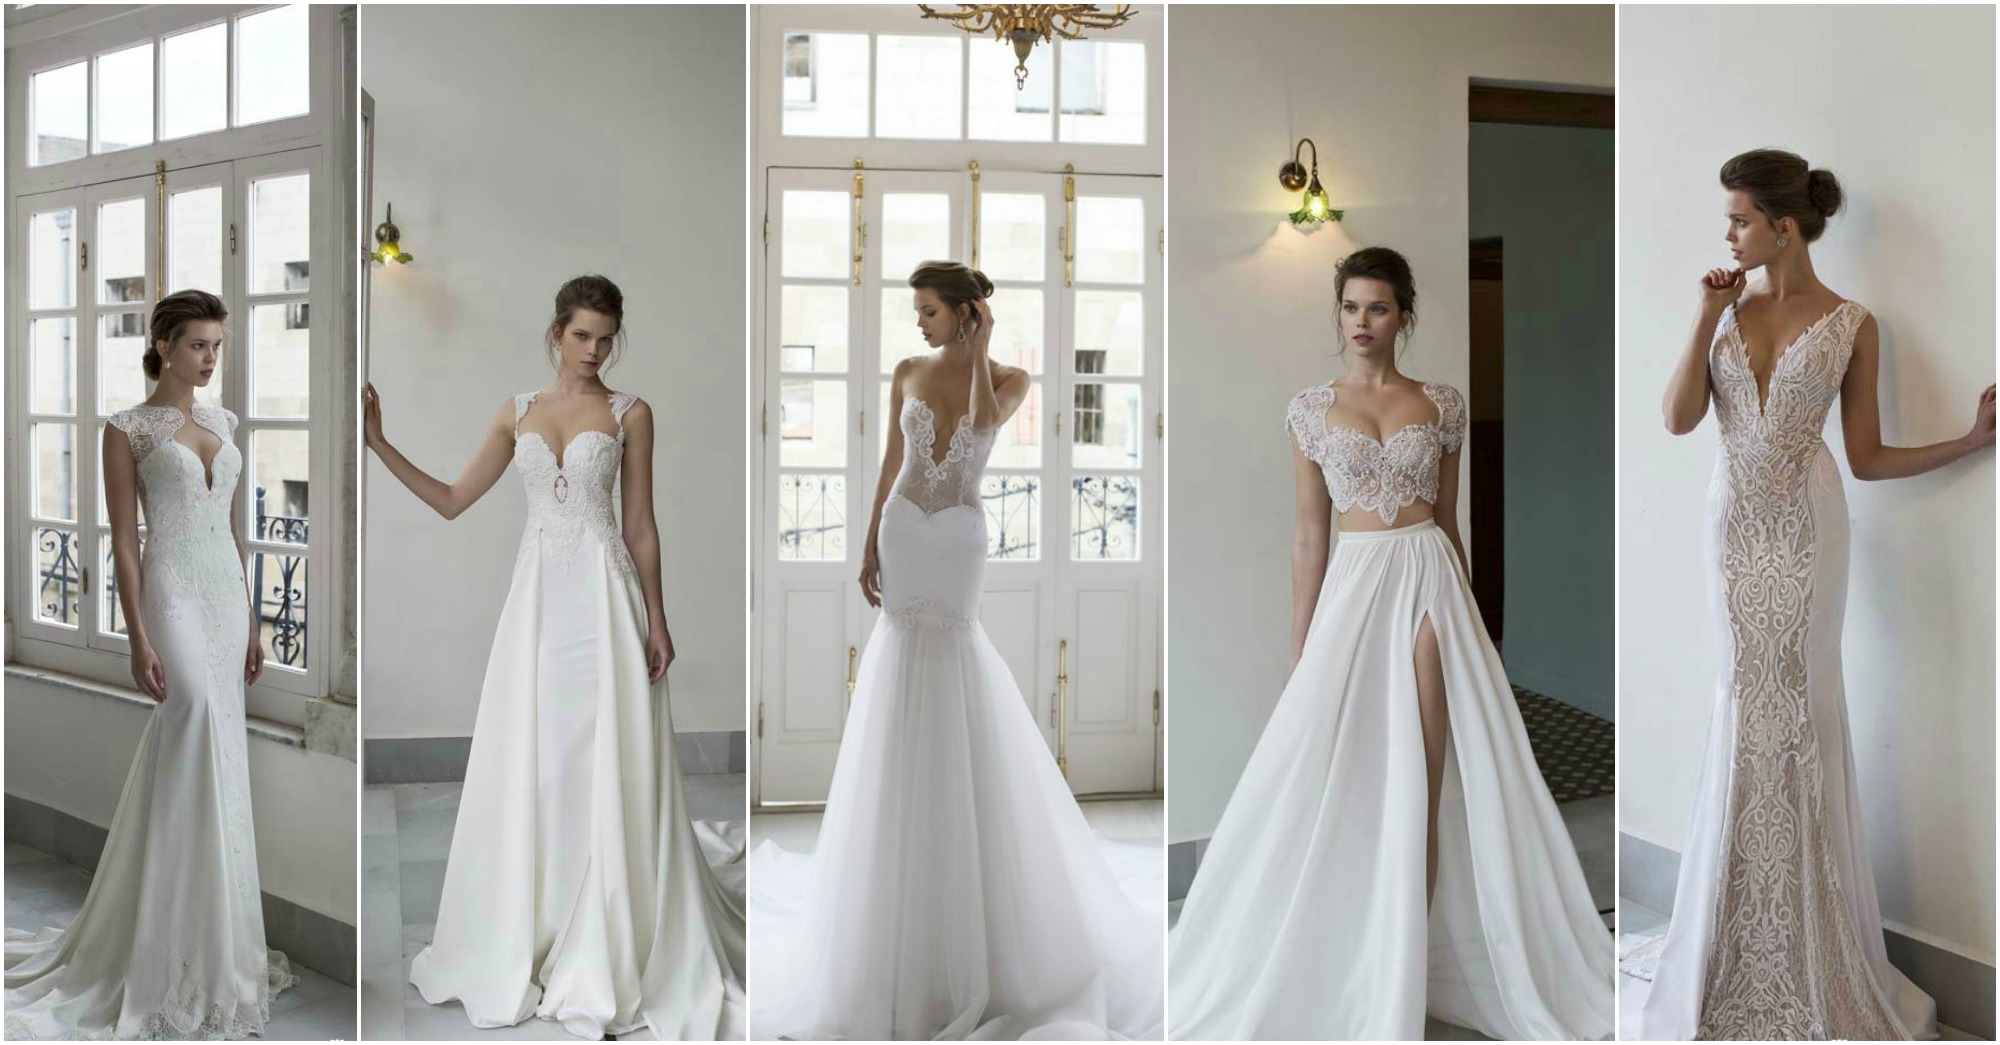 Riki Dalal - Breathtaking 2016 Bridal Collection - fashionsy.com